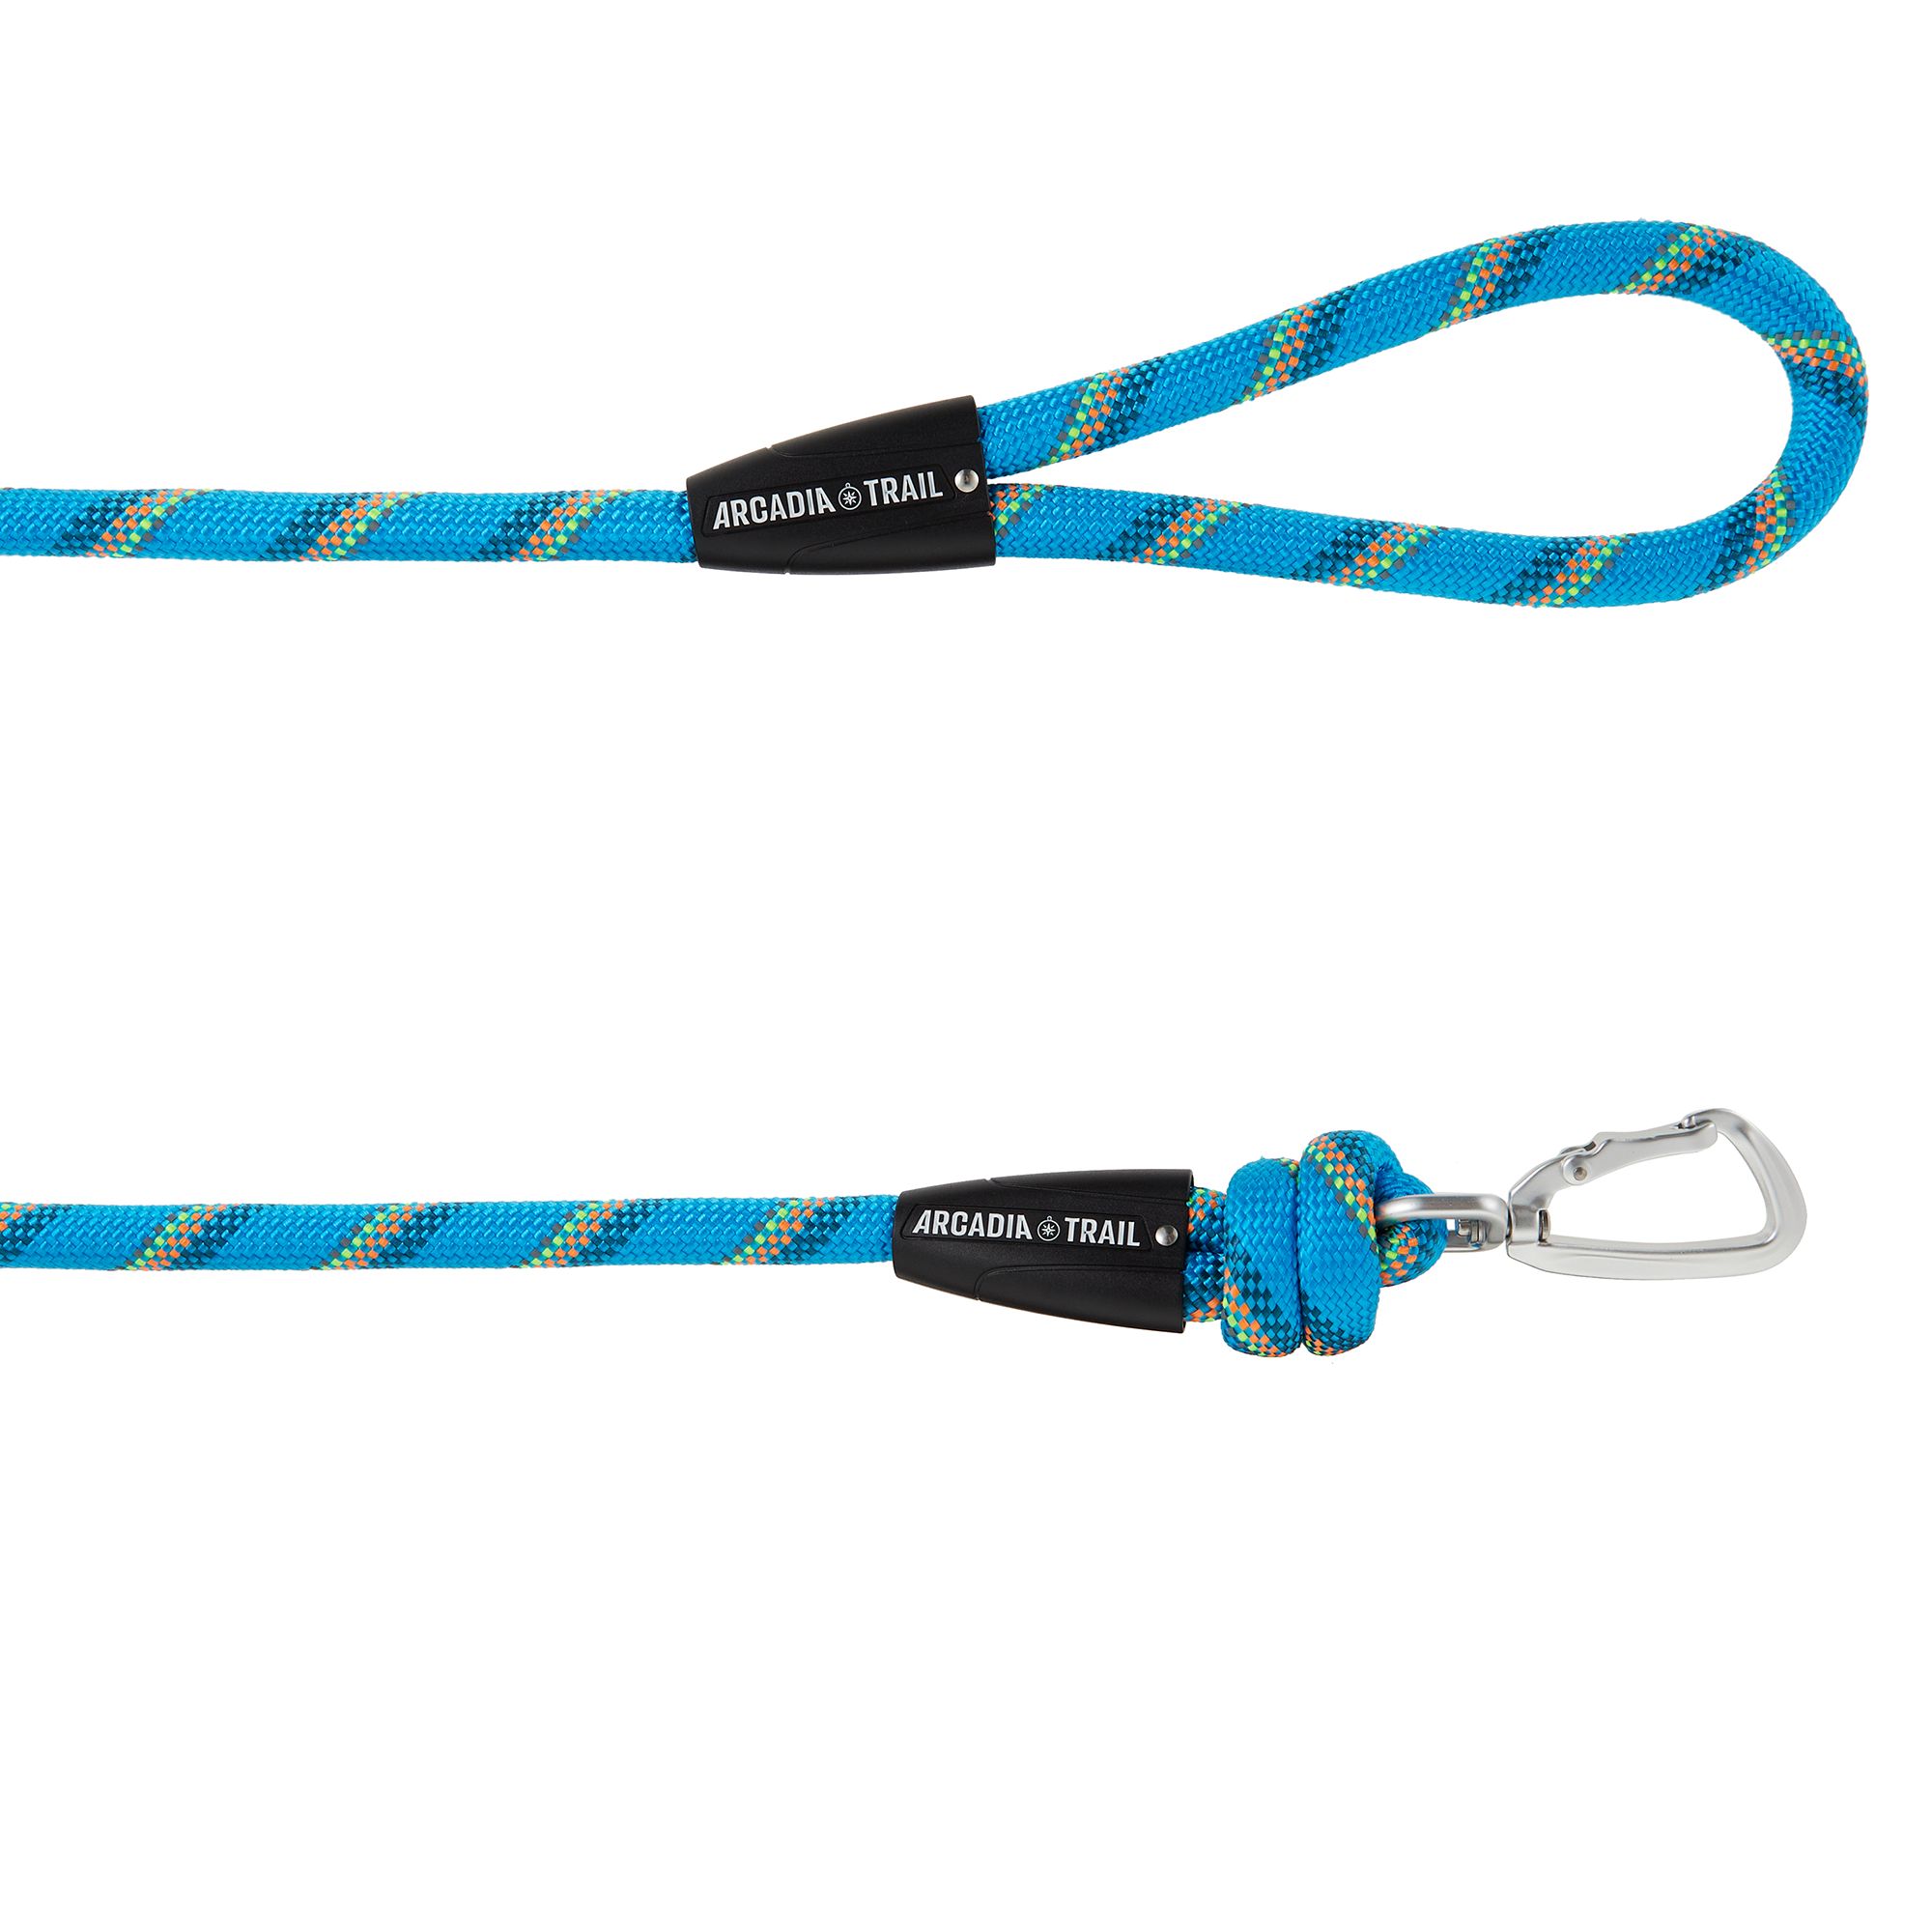 Arcadia Trail™ Rope Paracord Dog Leash: 4-ft long